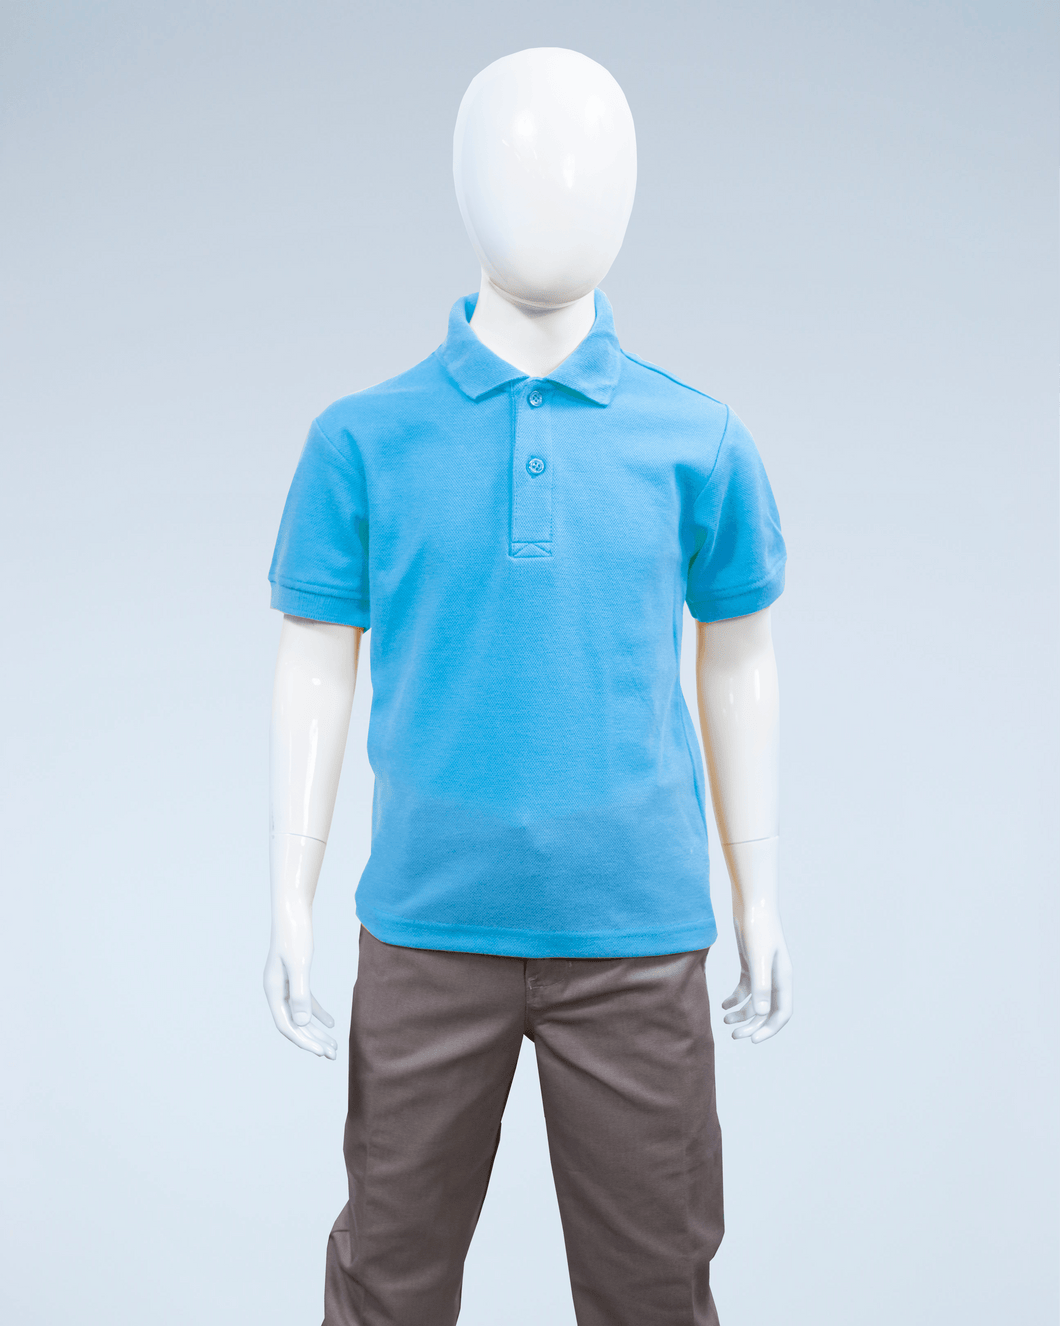 Children's light blue pique polo shirt